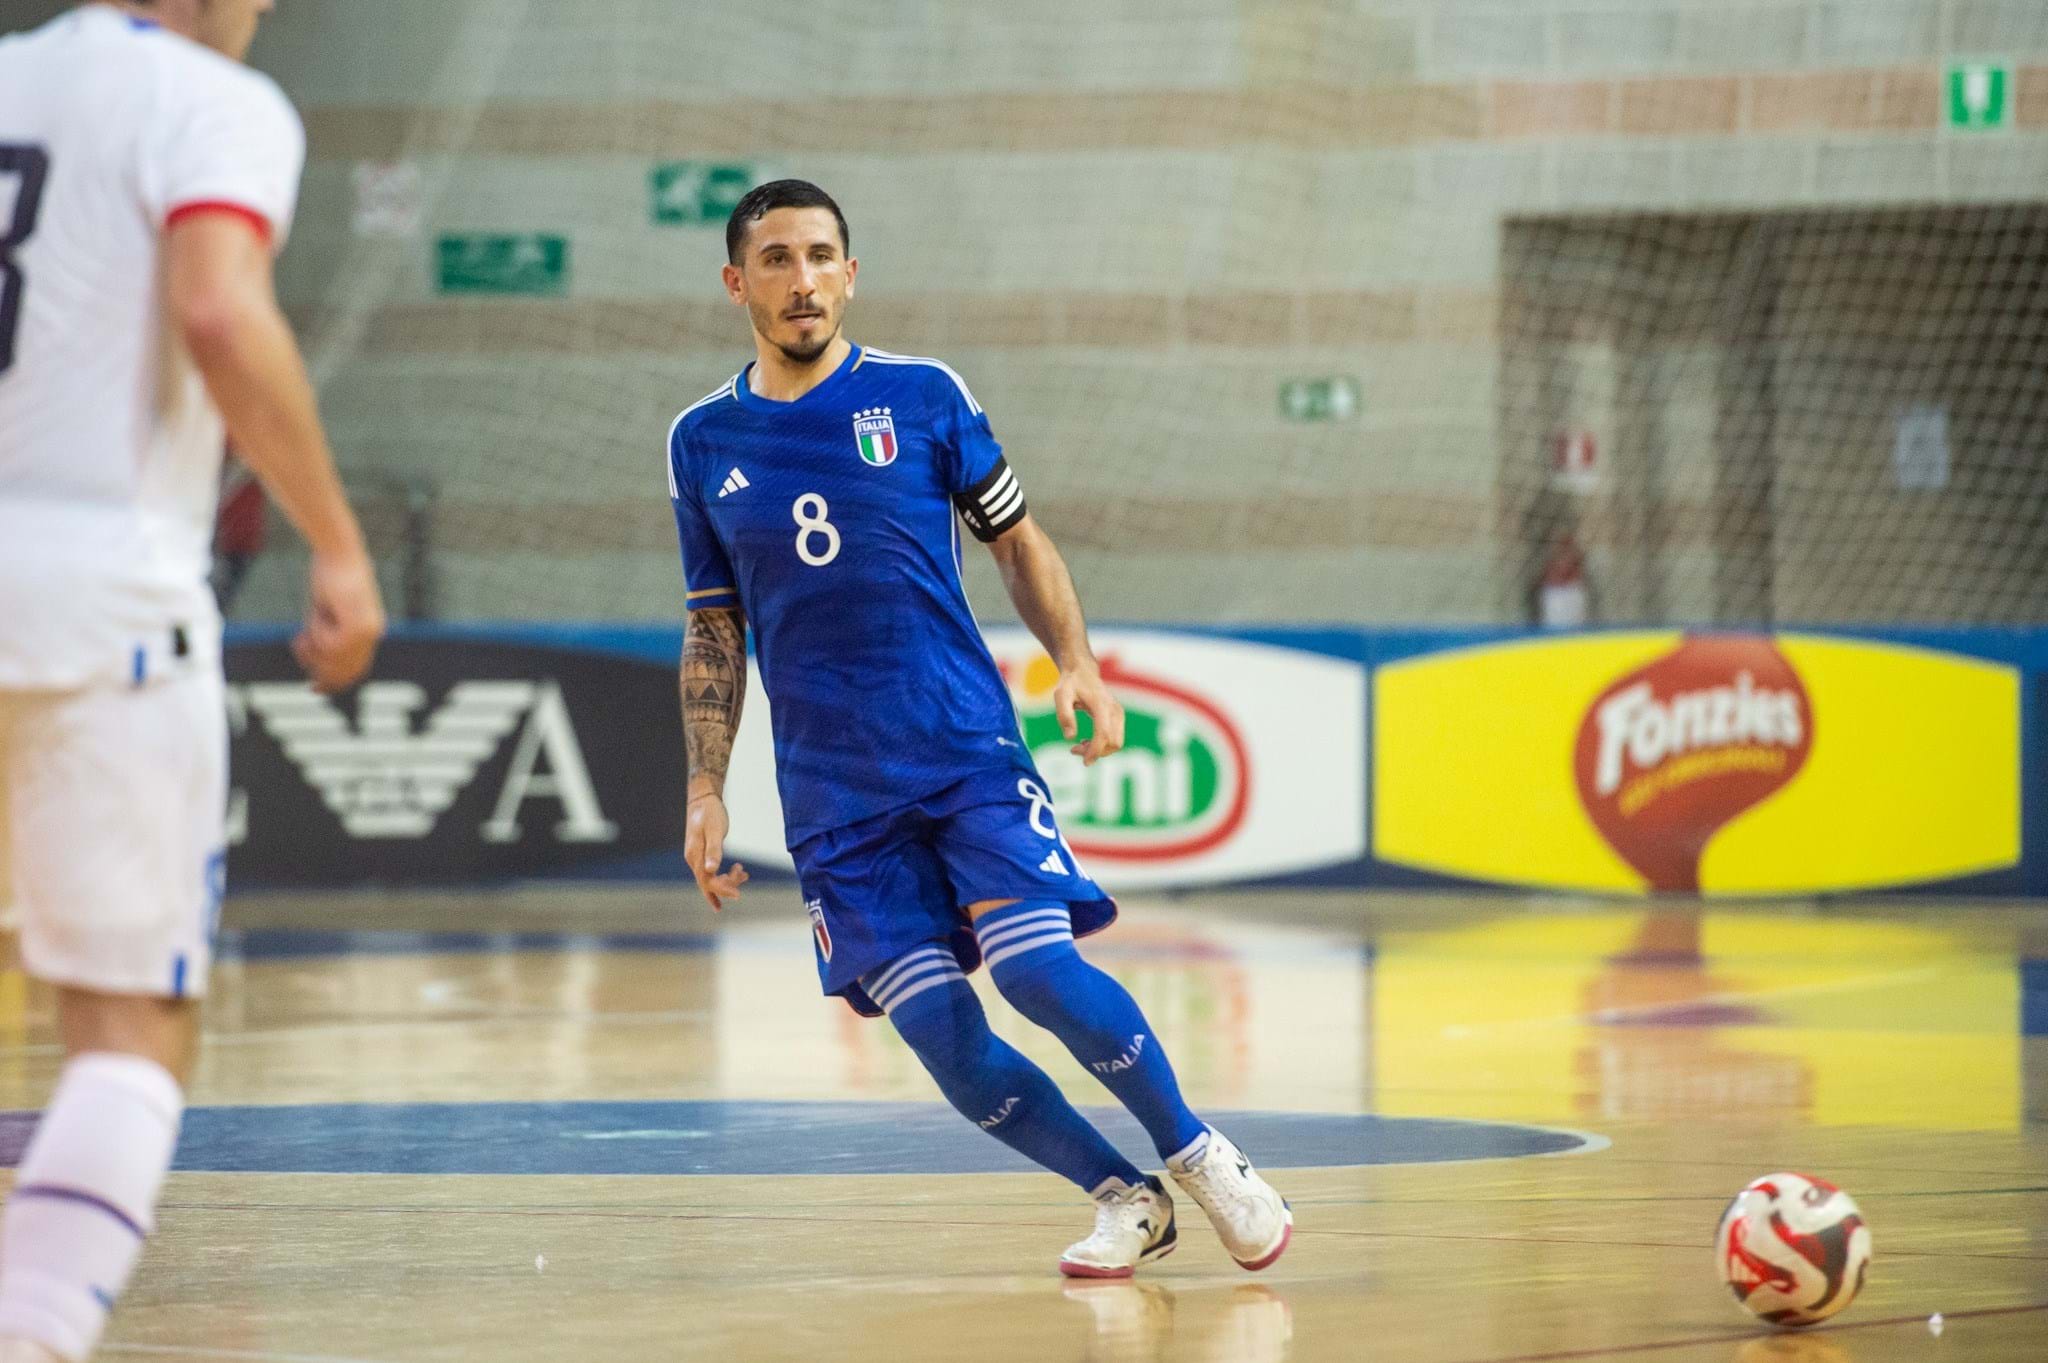 L’Italia alla Futsal Week di Porec: torneo con Turchia, Bosnia ed Erzegovina e Venezuela. Bellarte convoca 18 calciatori